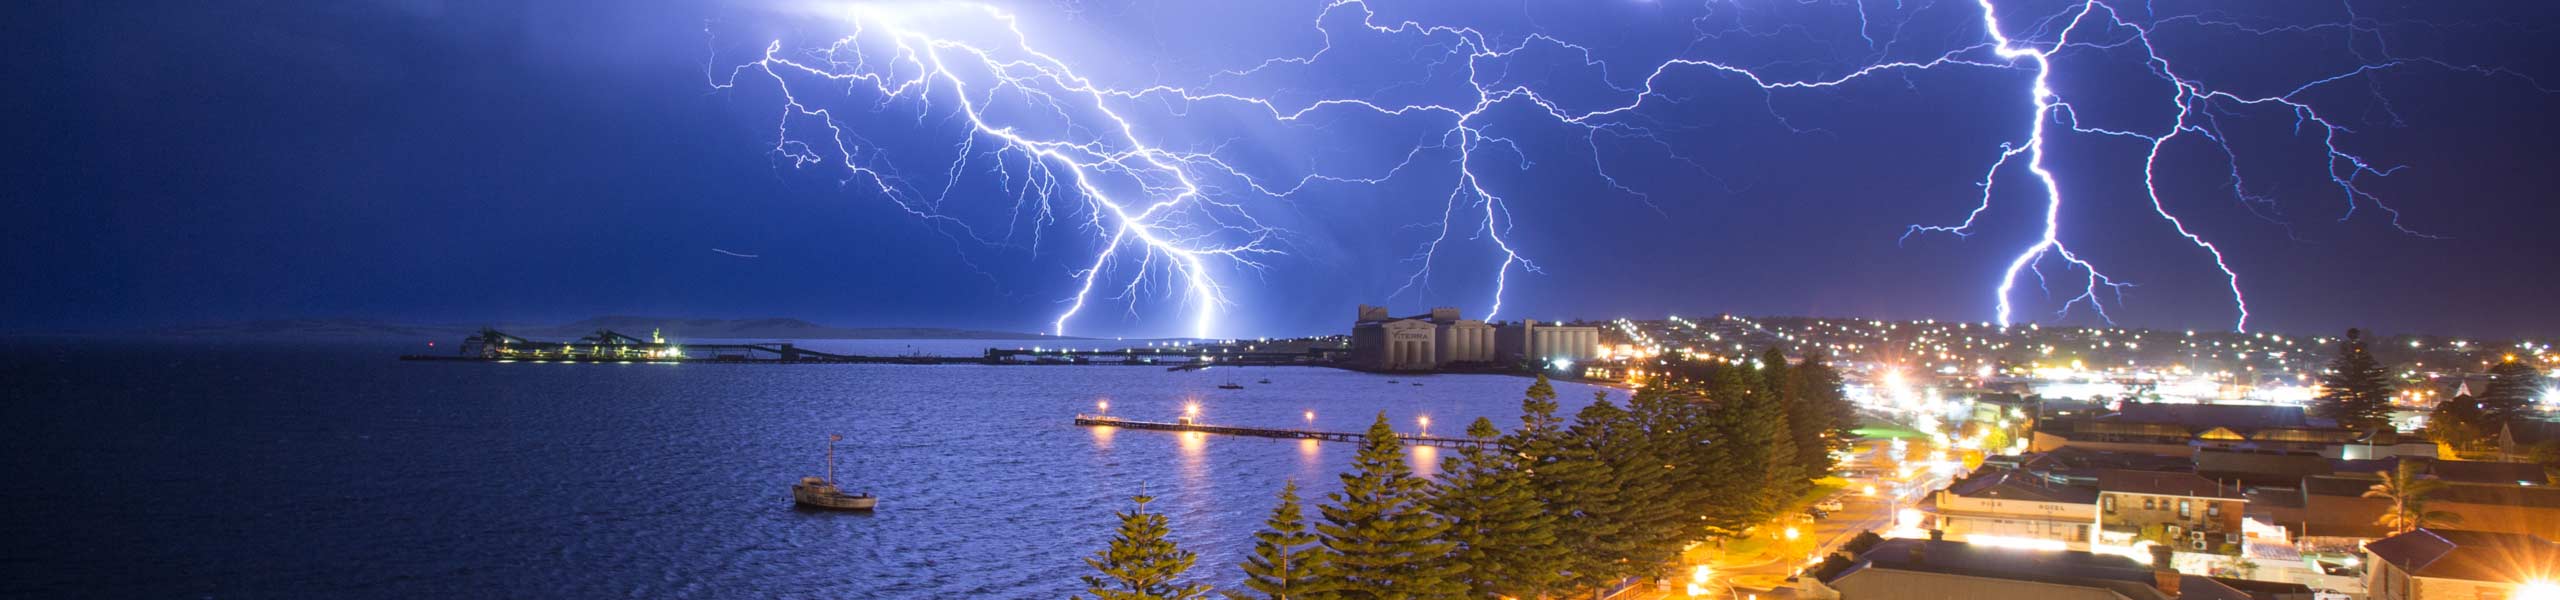 Lightning storm over Port Lincoln. South Australia South Australia Power Network SAPN customer story